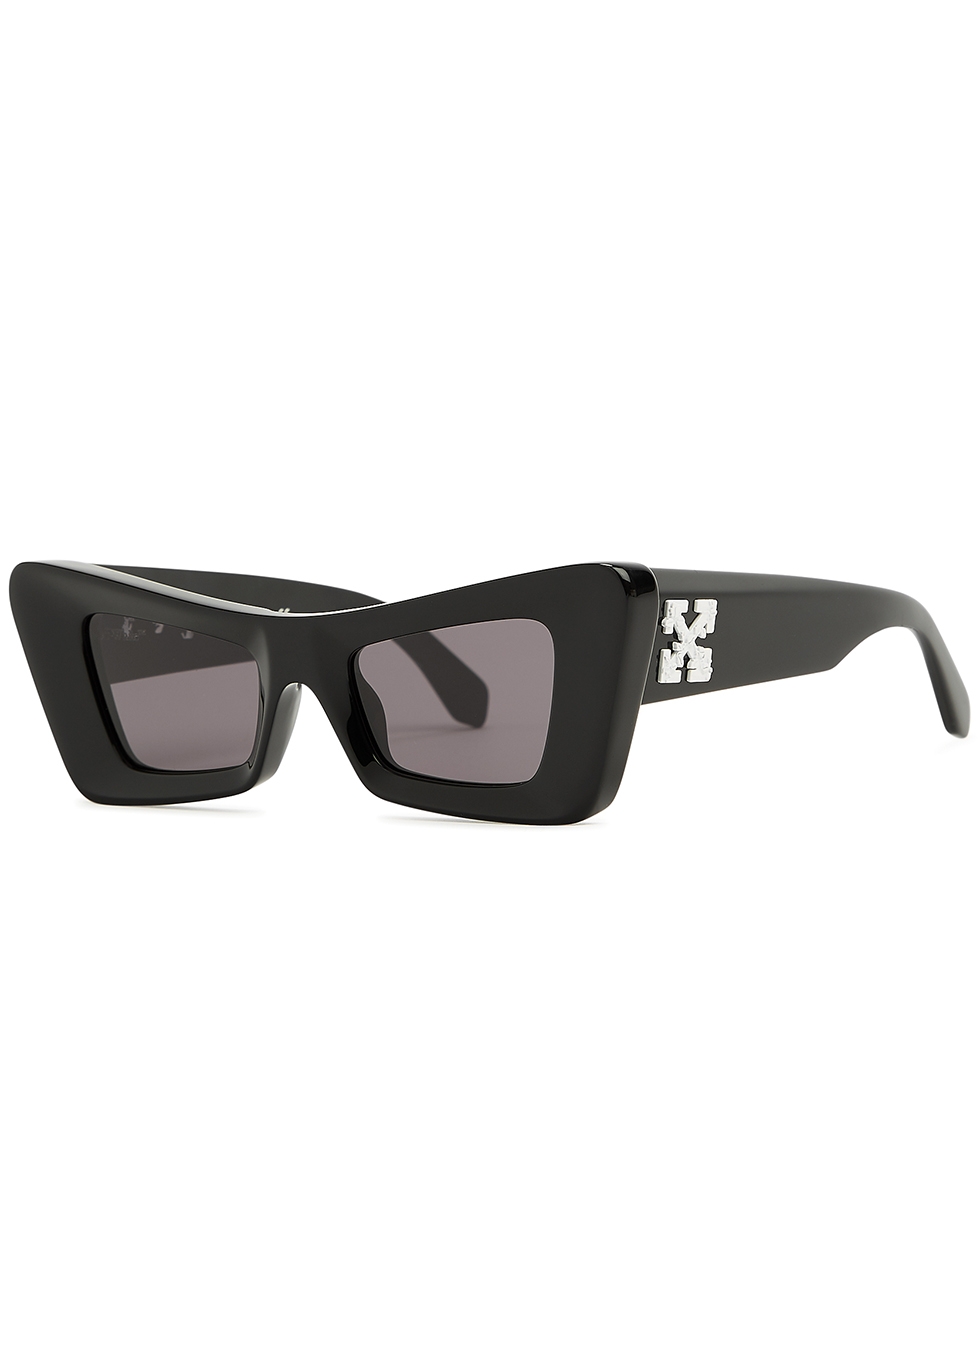 Off-White Accra black cat-eye sunglasses - Harvey Nichols